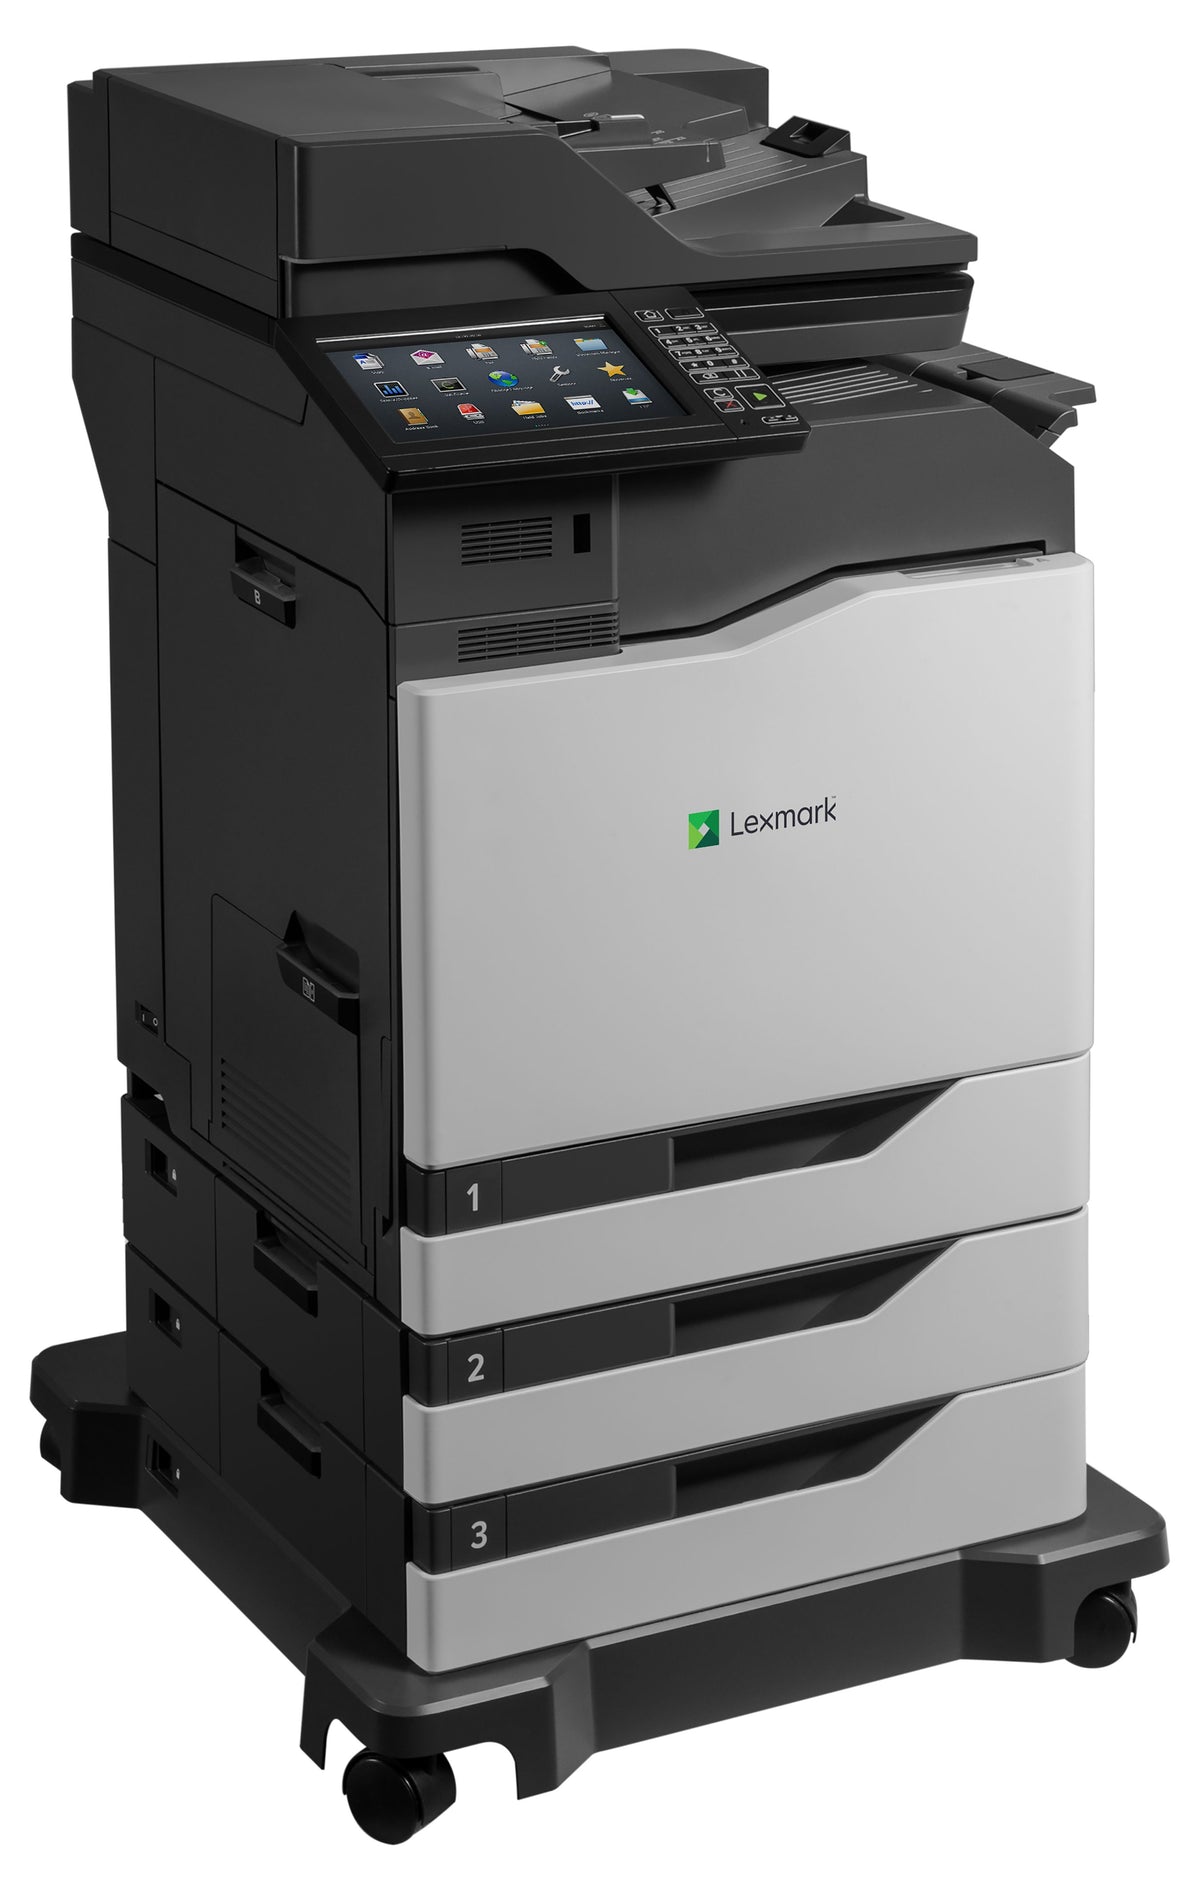 LEXMARK Multifunction Laser Printer CX825dtfe